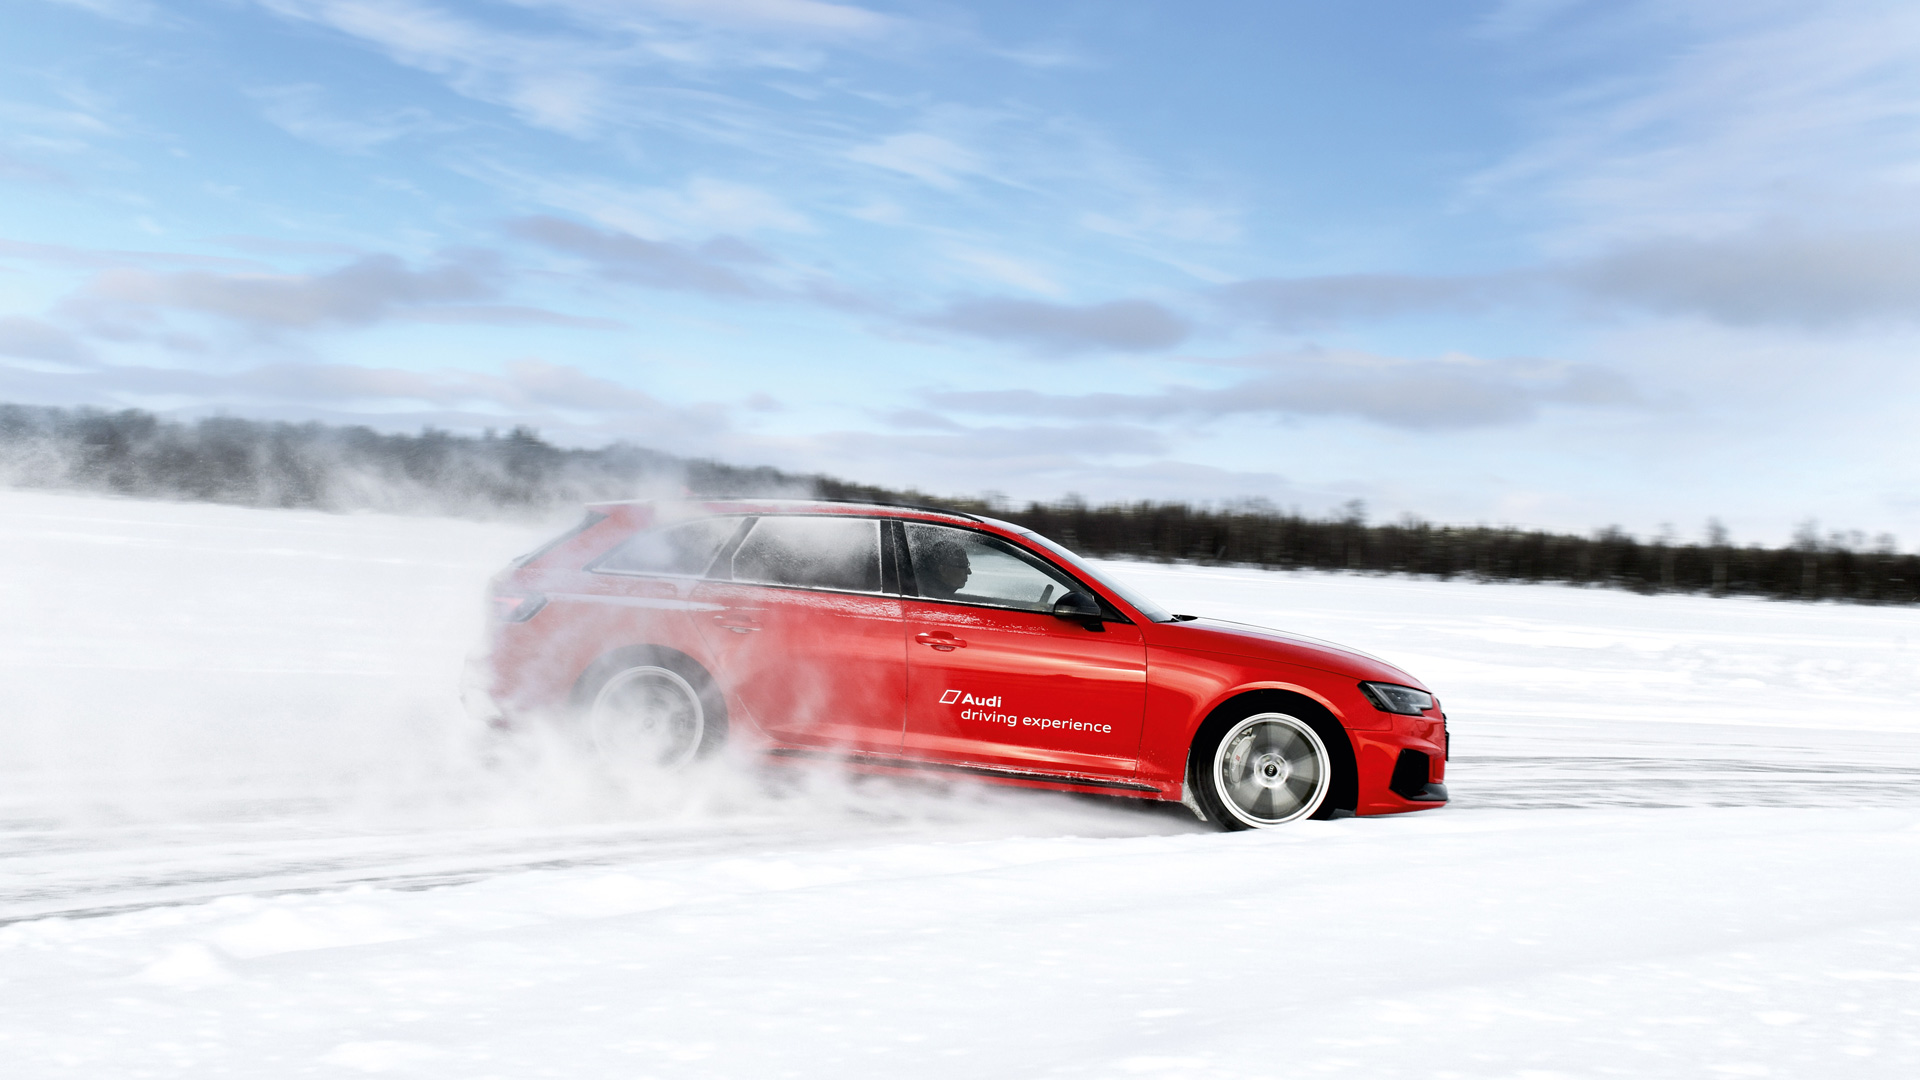 Audi driving experience > Audi Deutschland